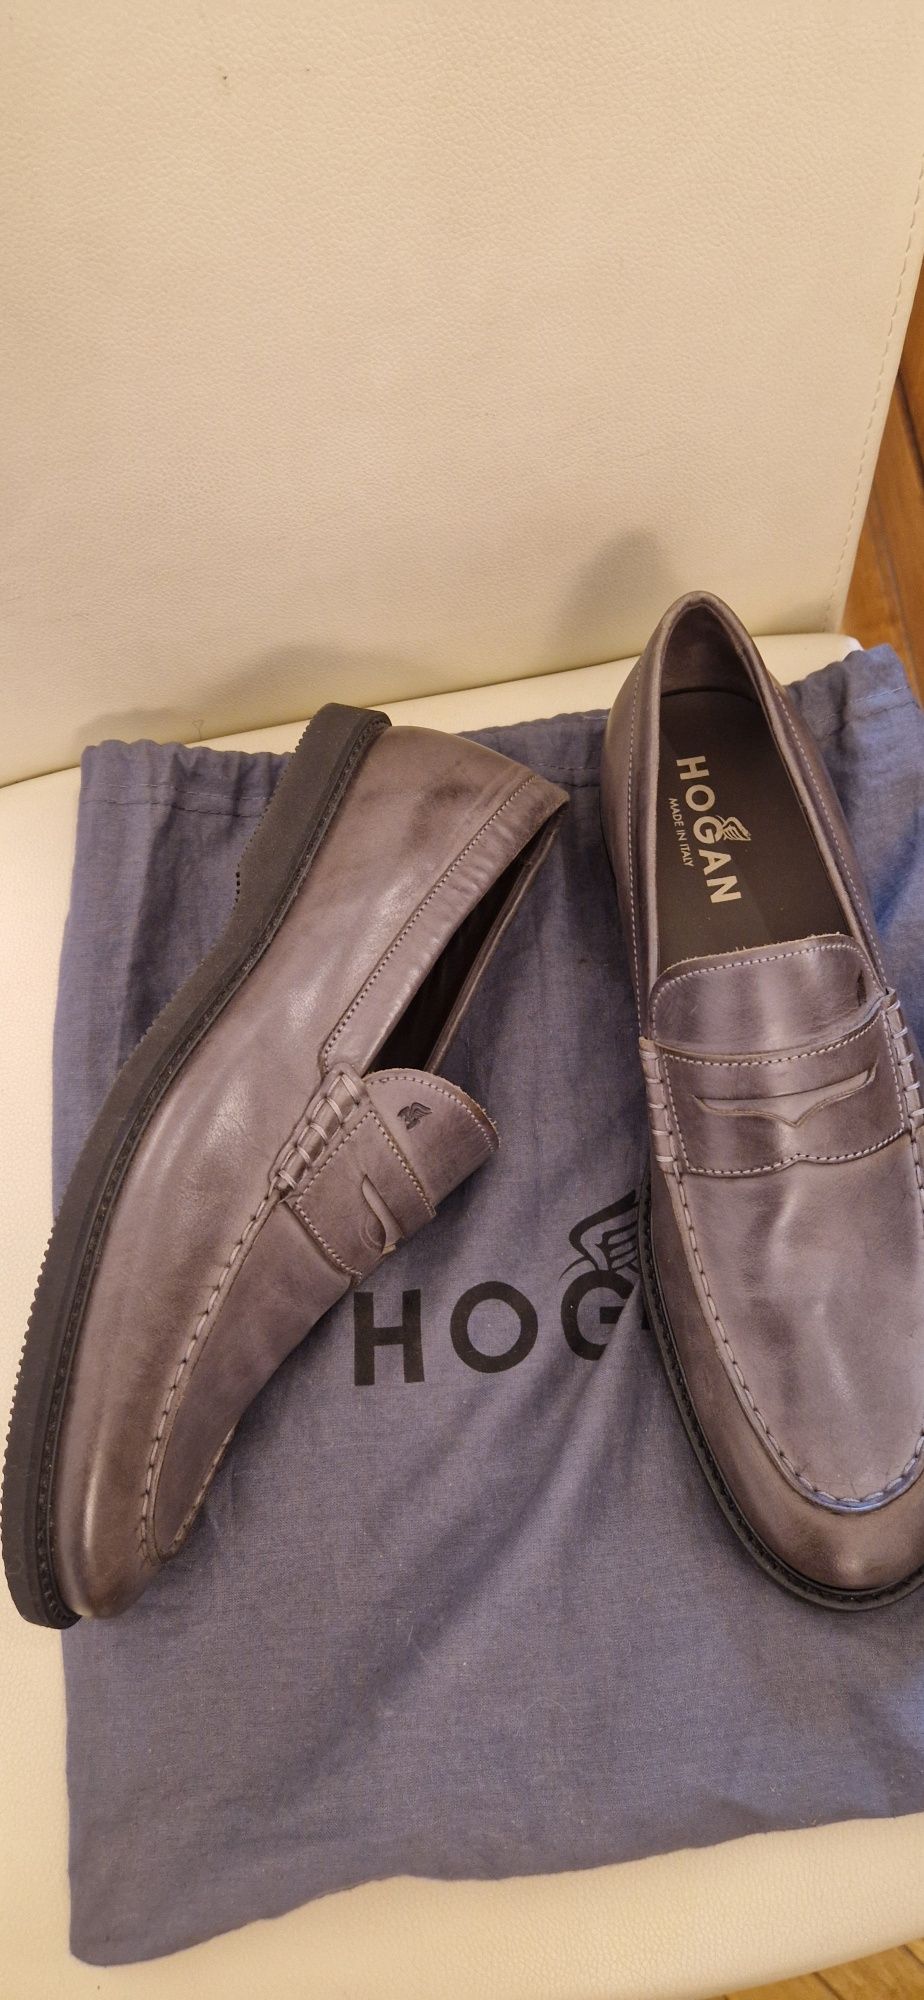 Hogan sporty loafers